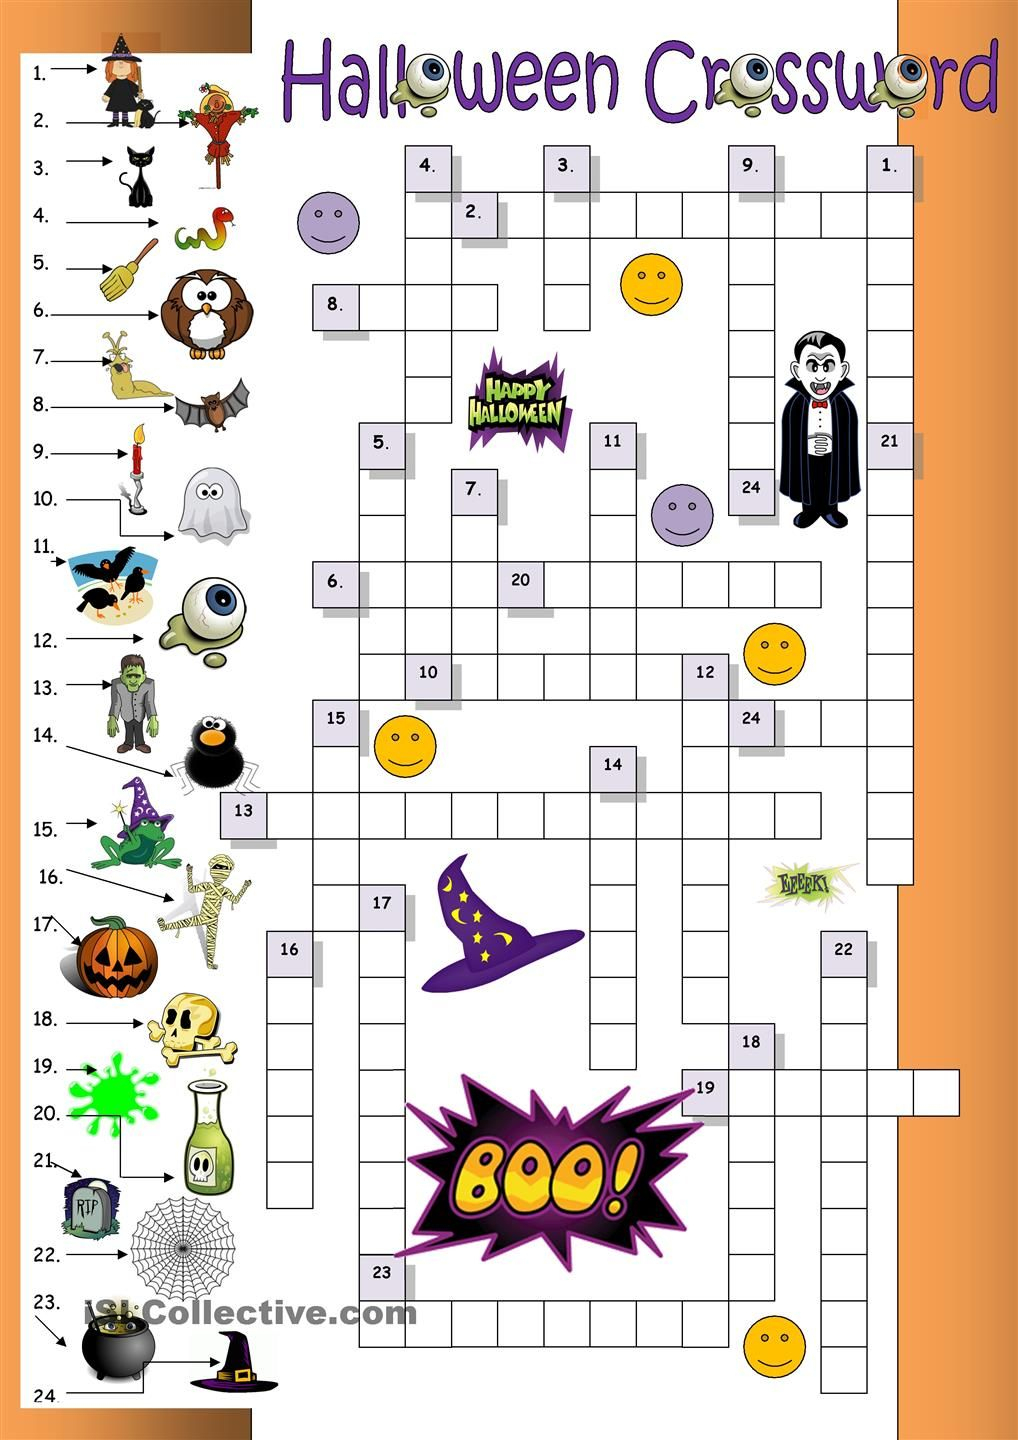 Halloween Crossword For Beginners | Esl Worksheets Of The Day - Printable Halloween Crossword